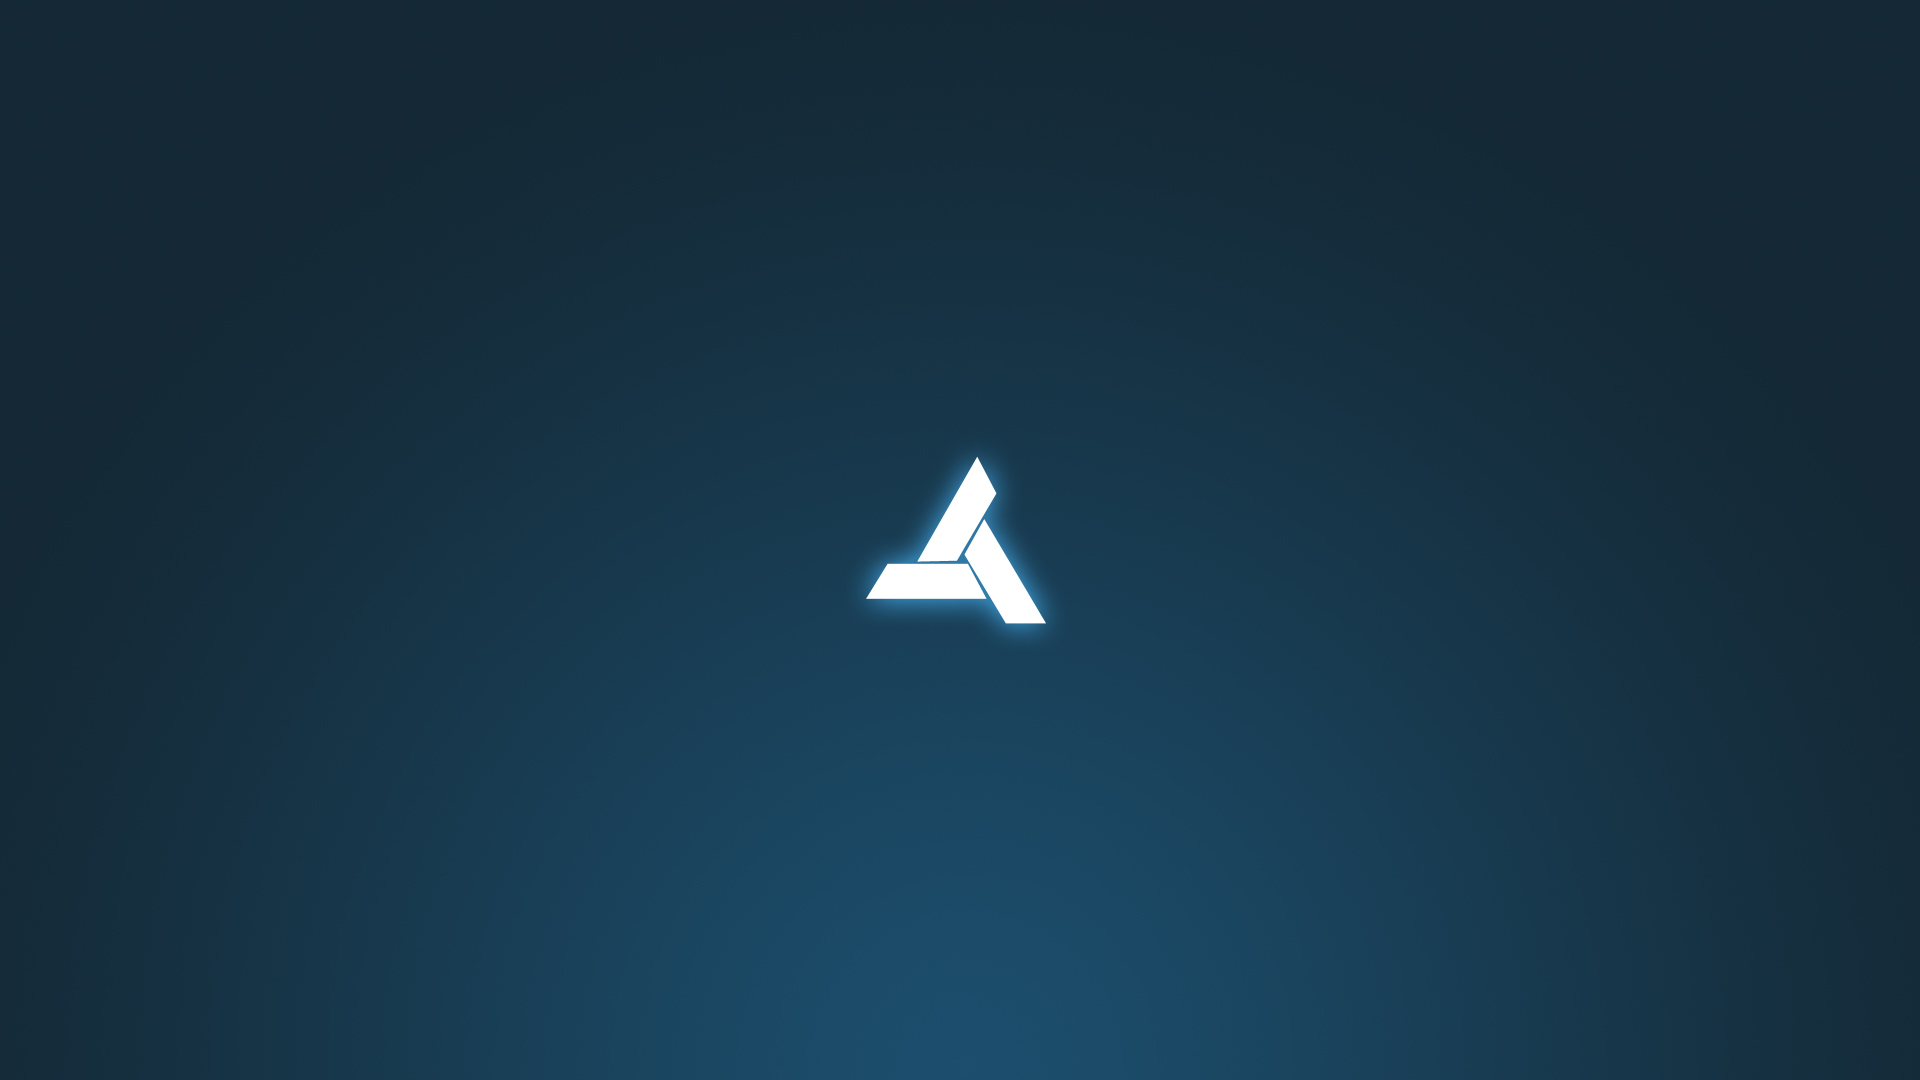 Assassins Creed, Abstergo Industries, логотипы - обои на рабочий стол